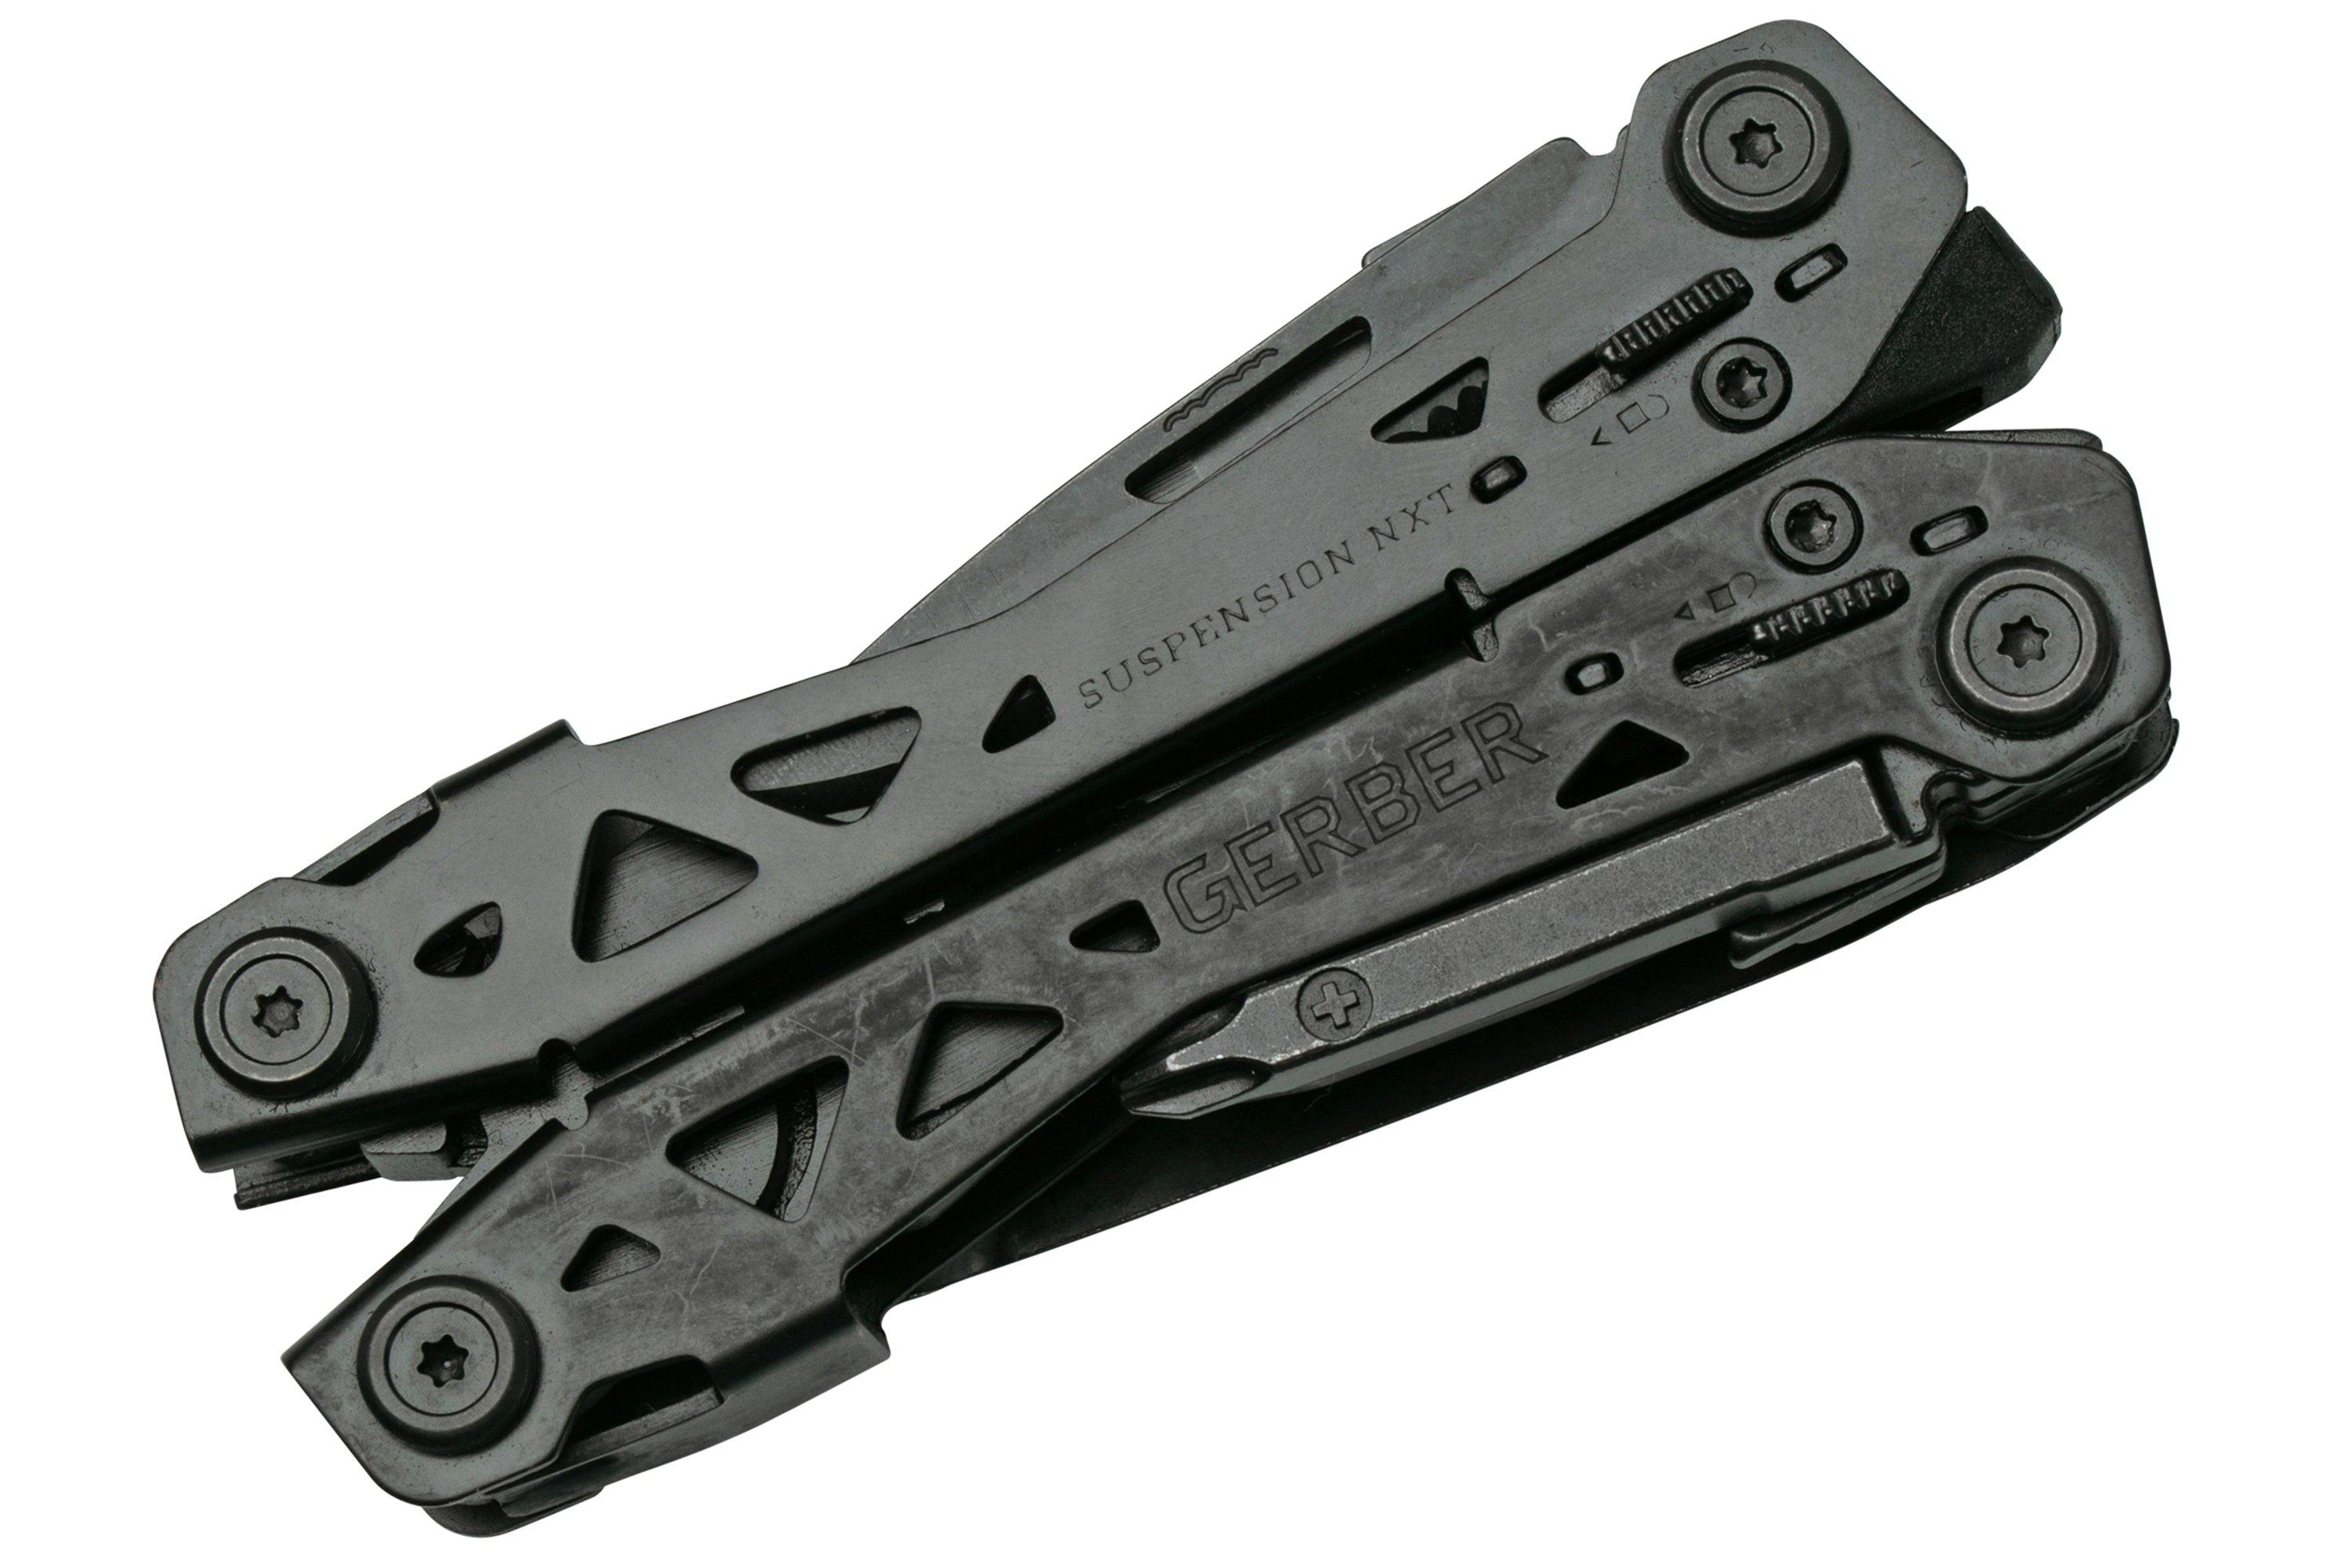 Gerber Suspension NXT 30-001778, black, multi-tool | Advantageously